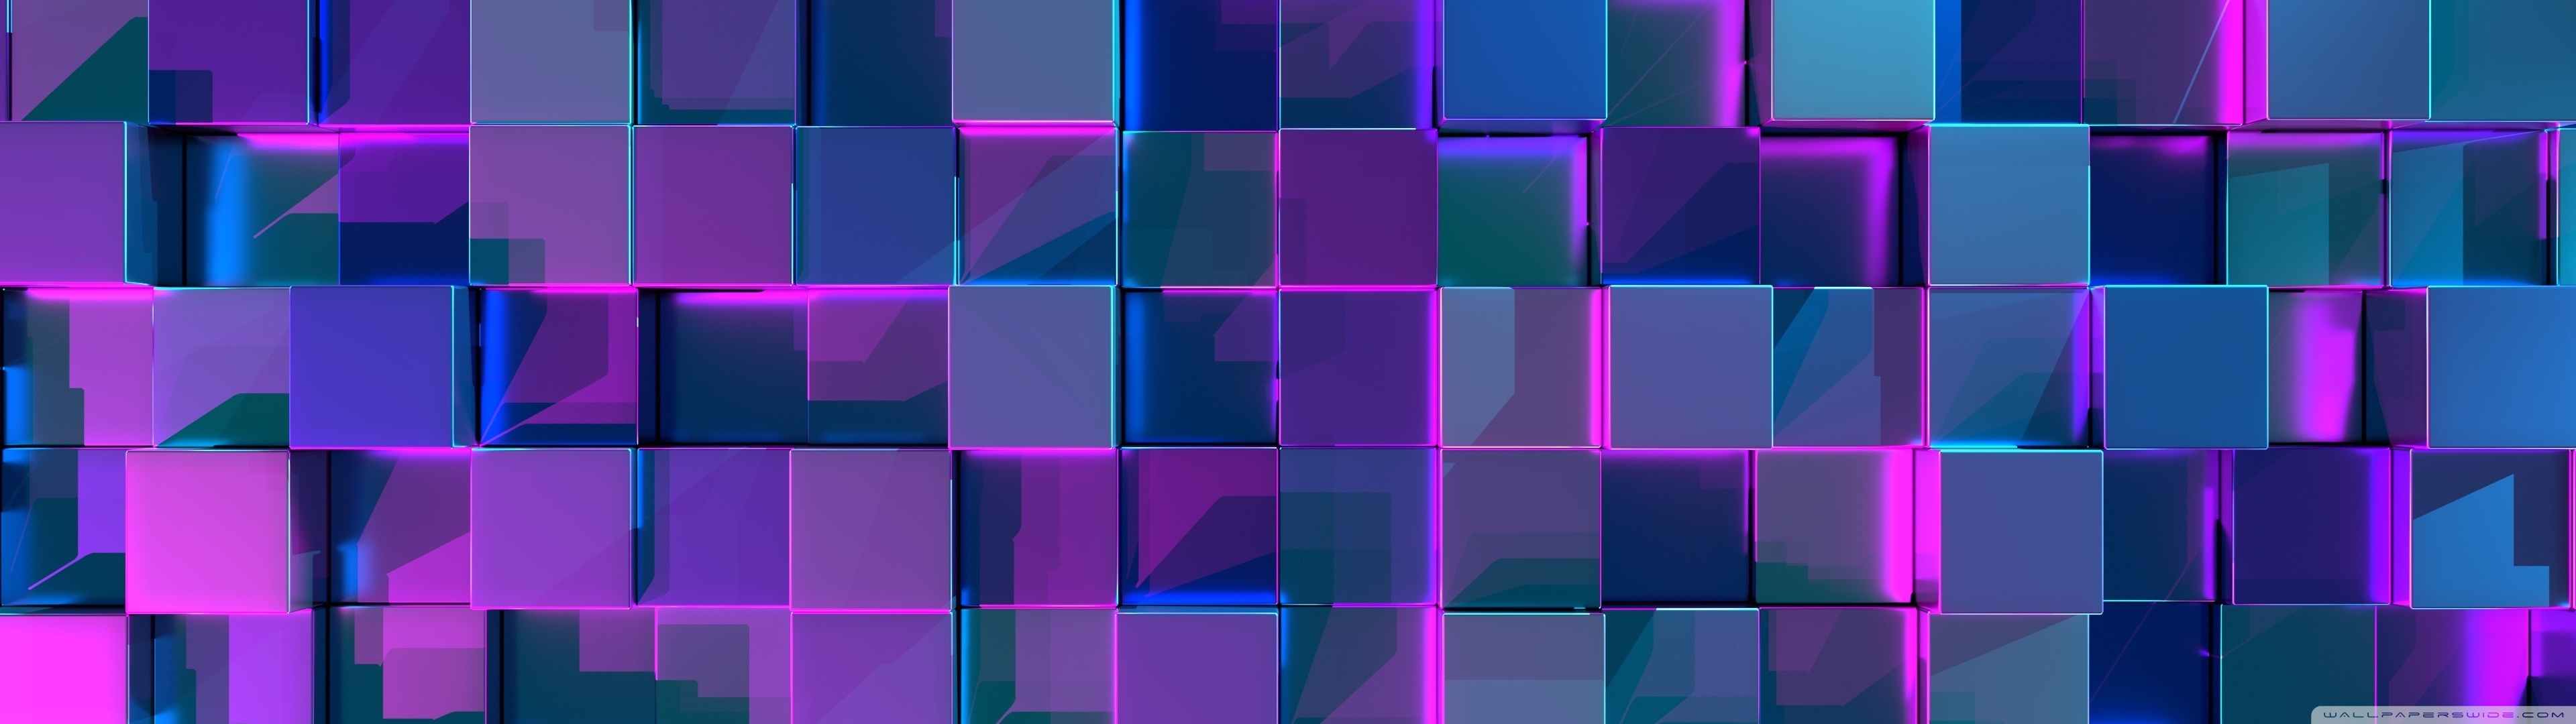 Blue Cubes, Purple Light Background Ultra HD Desktop Background Wallpaper  for : Widescreen & UltraWide Desktop & Laptop : Multi Display, Dual &  Triple Monitor : Tablet : Smartphone